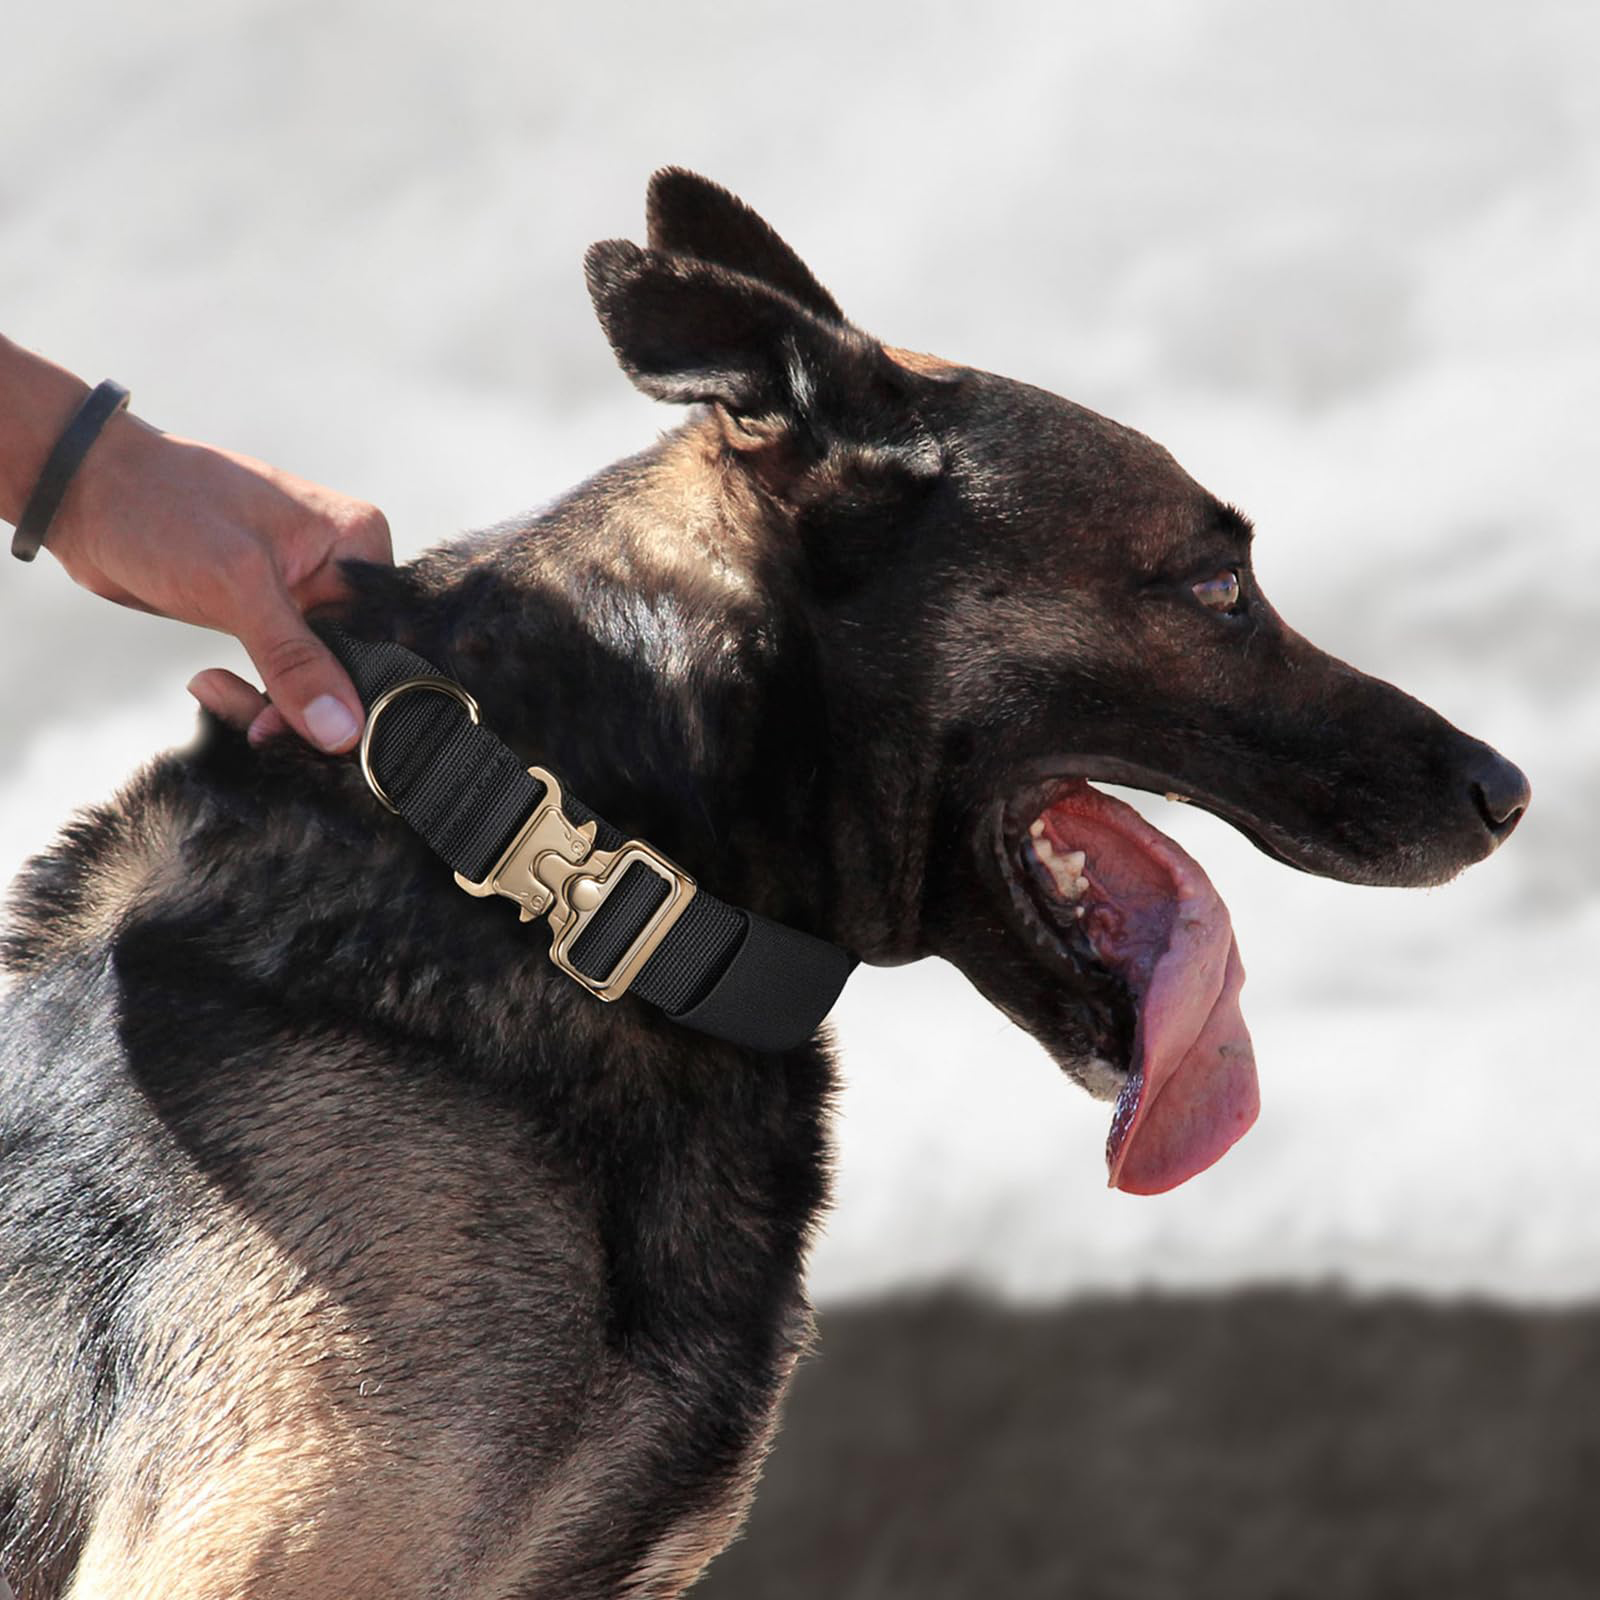 Militärisch verstellbares Hundehalsband, robustes Hundehalsband 